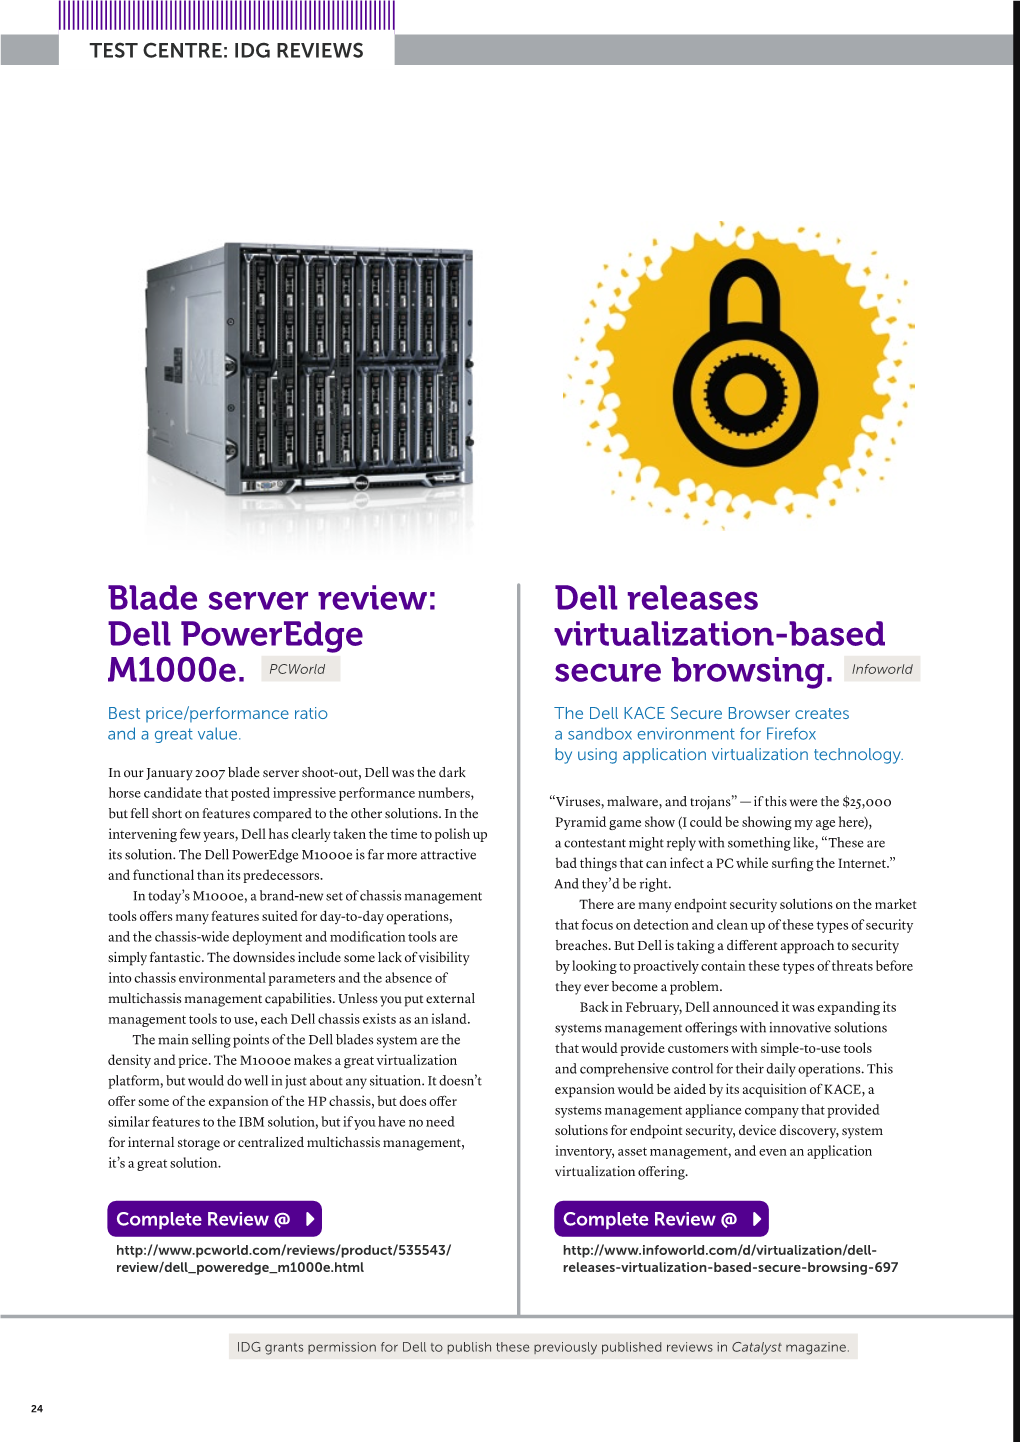 Blade Server Review: Dell Poweredge M1000e. Dell Releases Virtualization